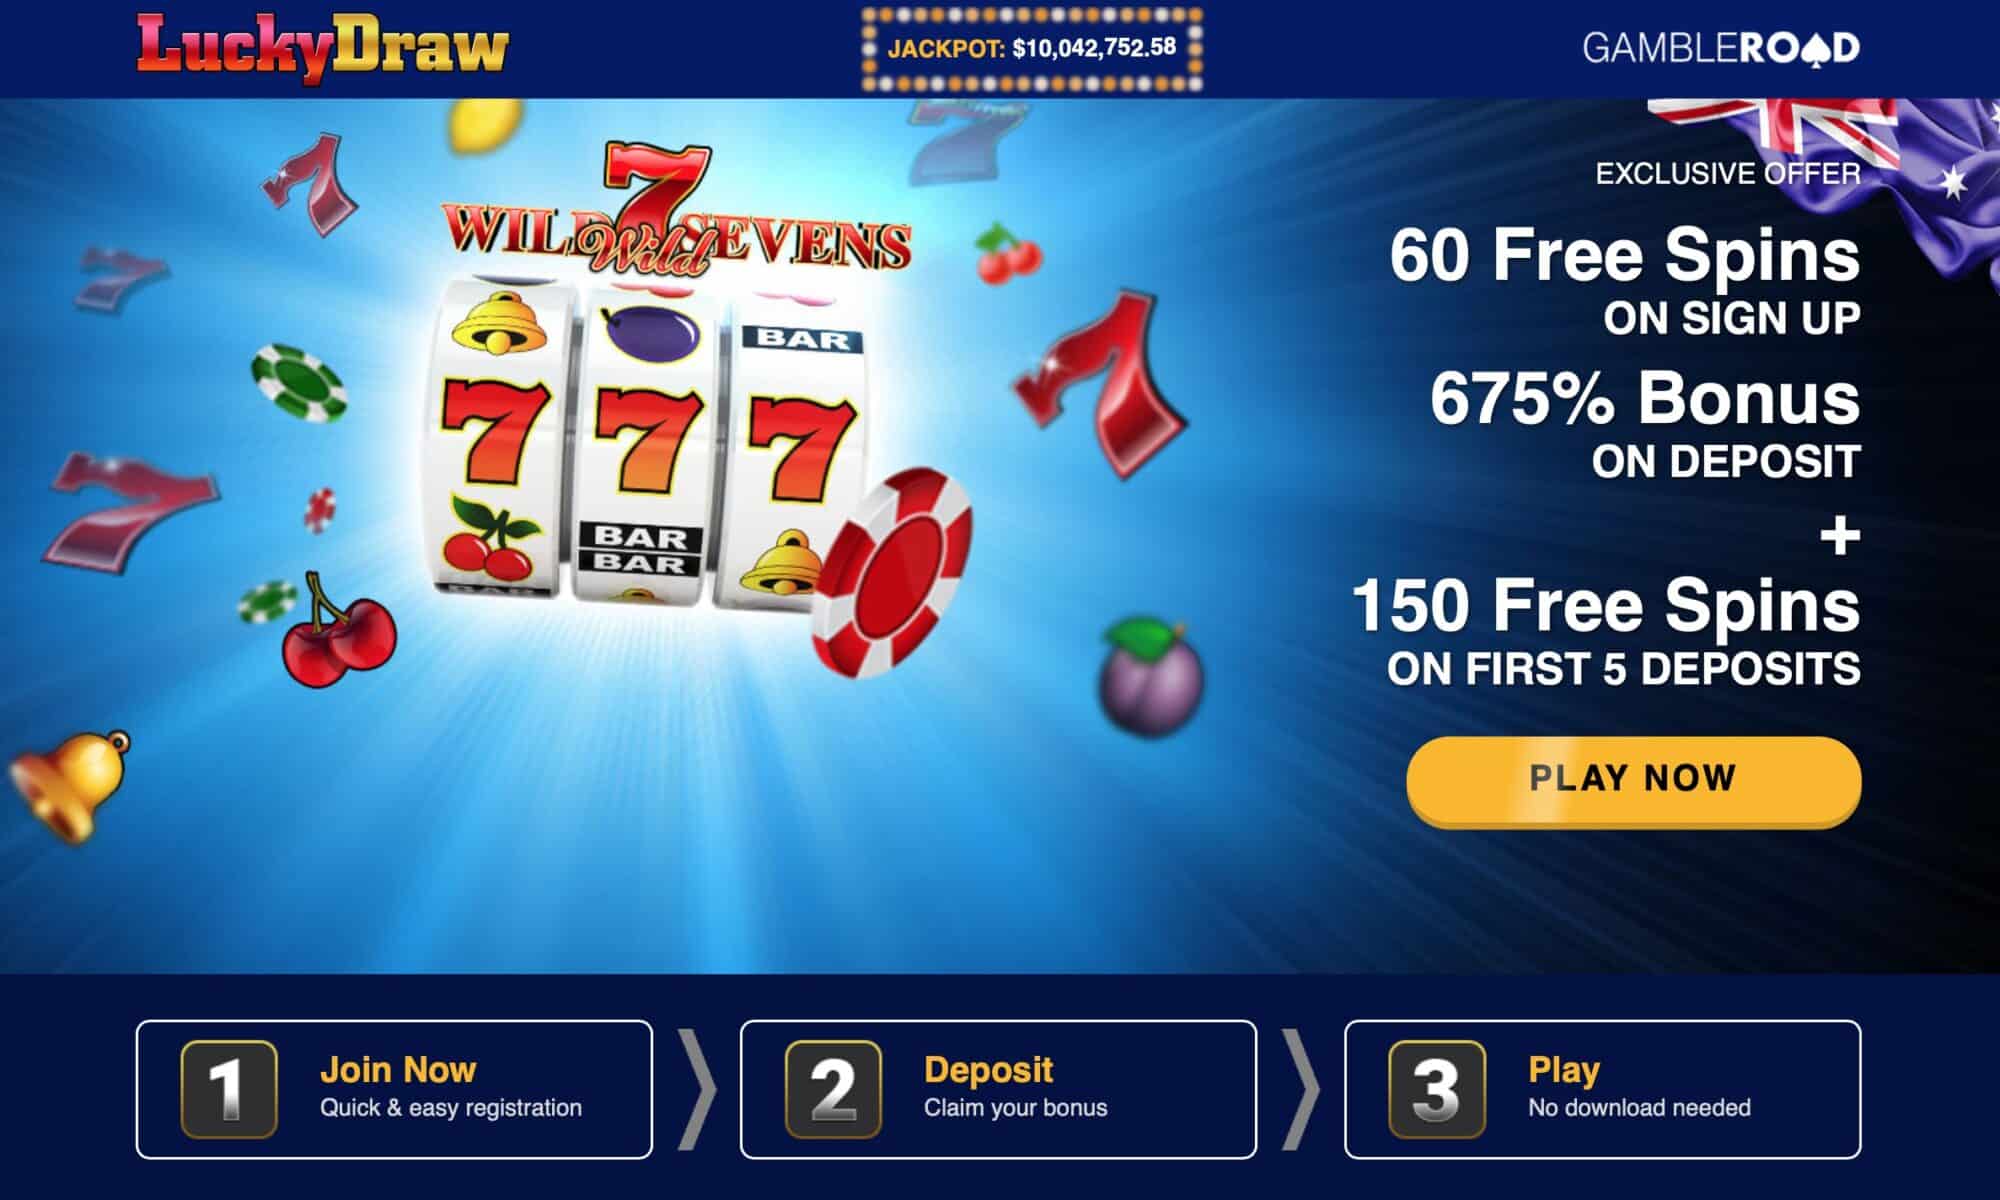 LuckyDraw Casino - get 150 free spins on signup + 675% deposit bonus